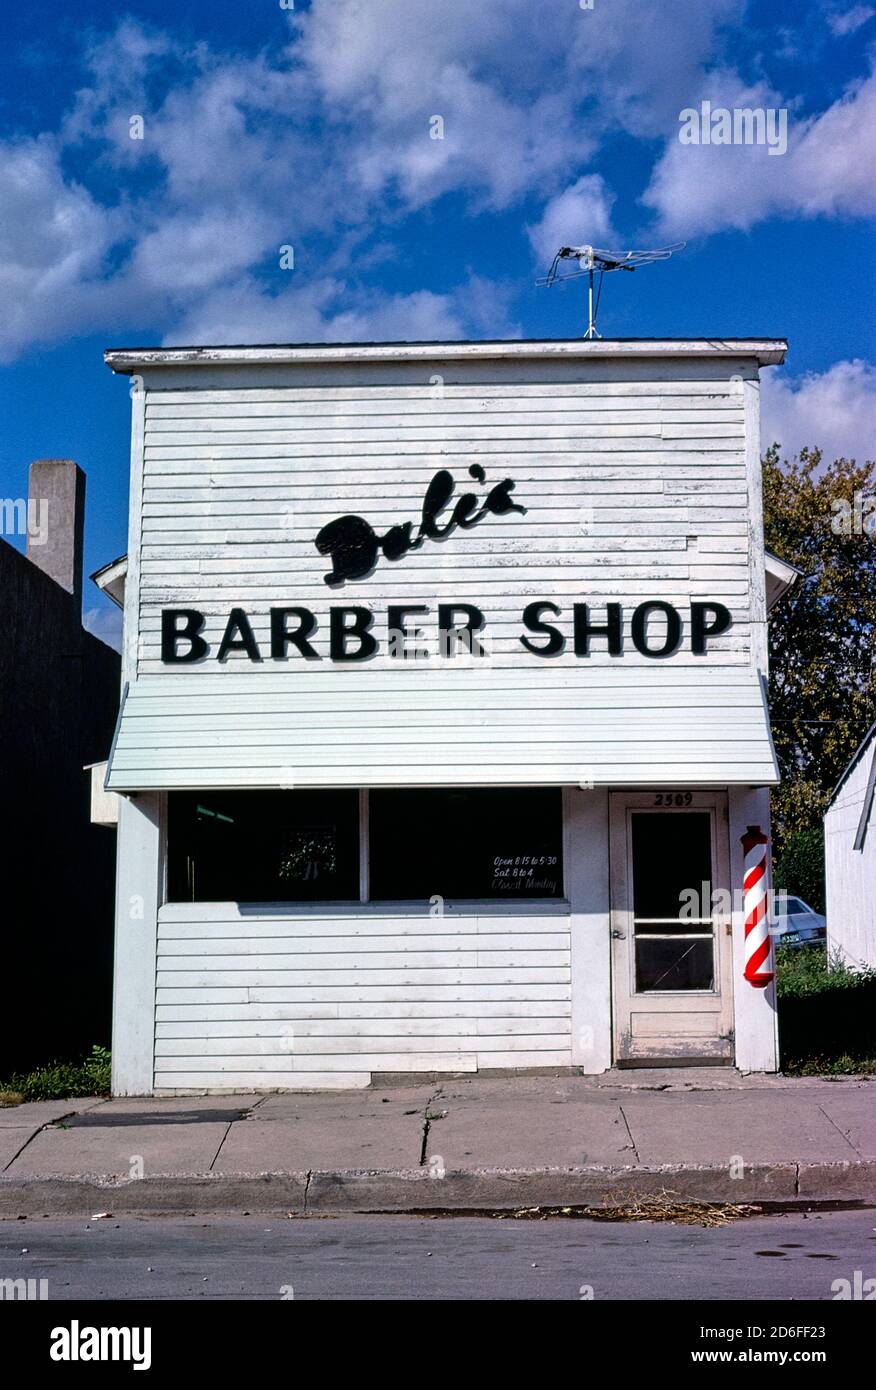 Men's haircuts Farmington Hills by 8 mile road From Hair Mechanix